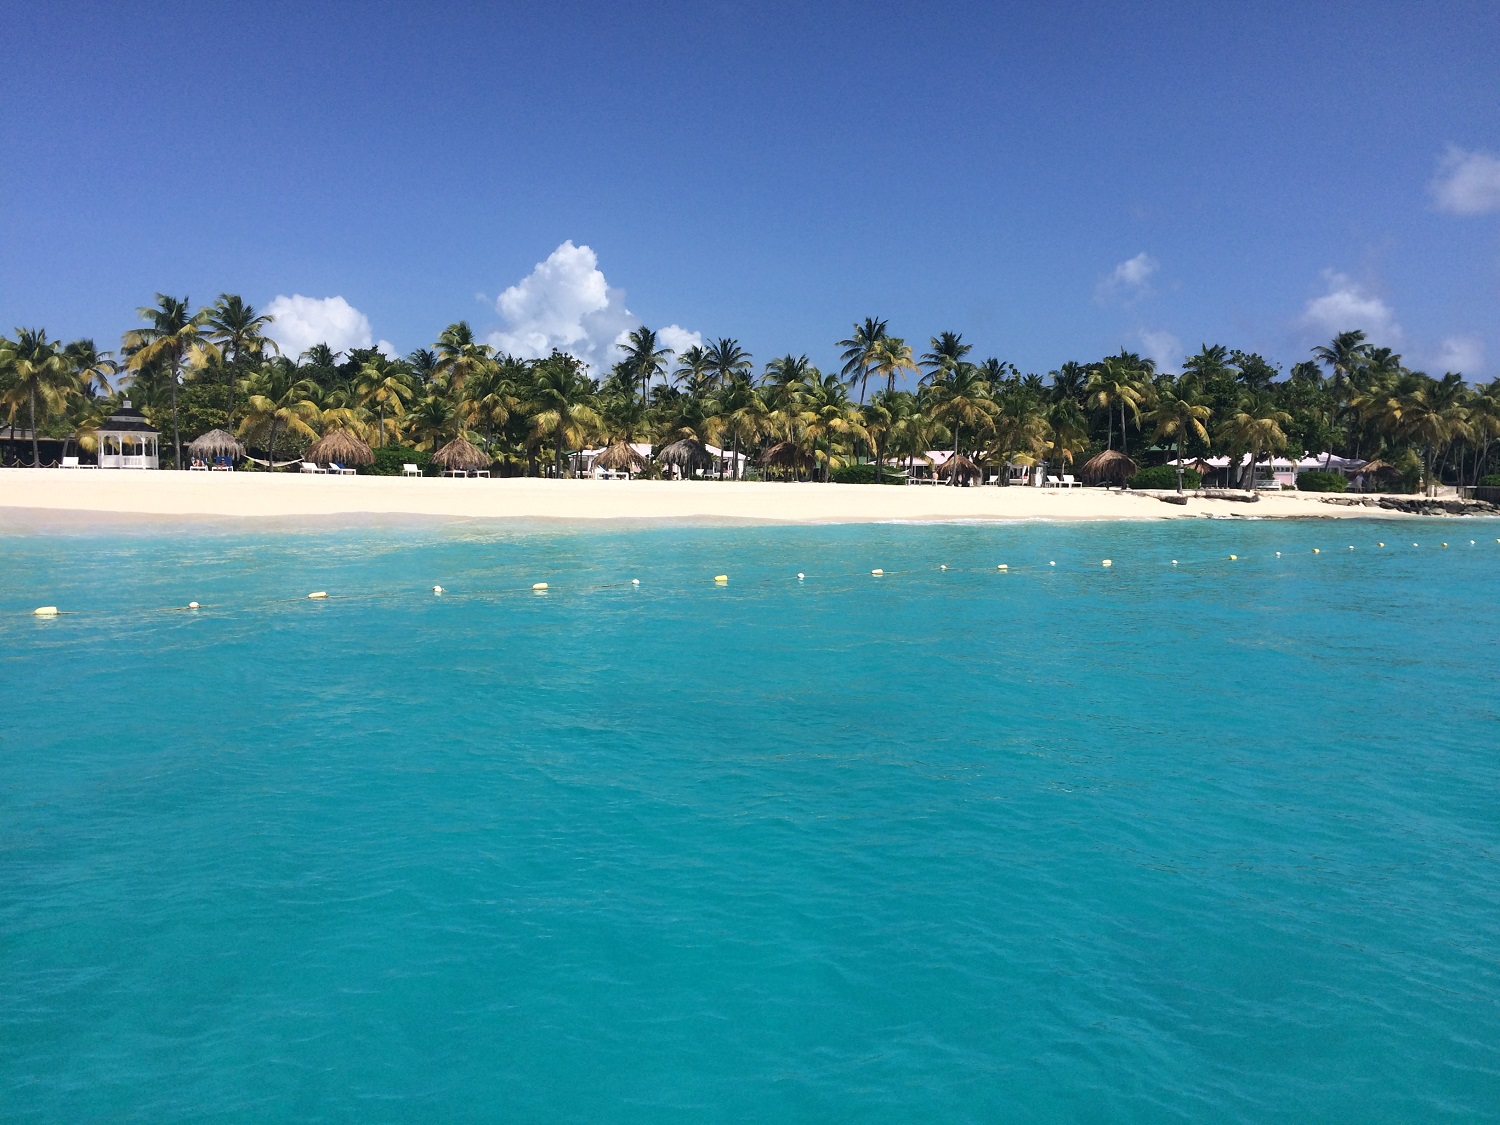 Svätý Vincent a Grenadíny - cestovateľské rady, tipy a itinerár